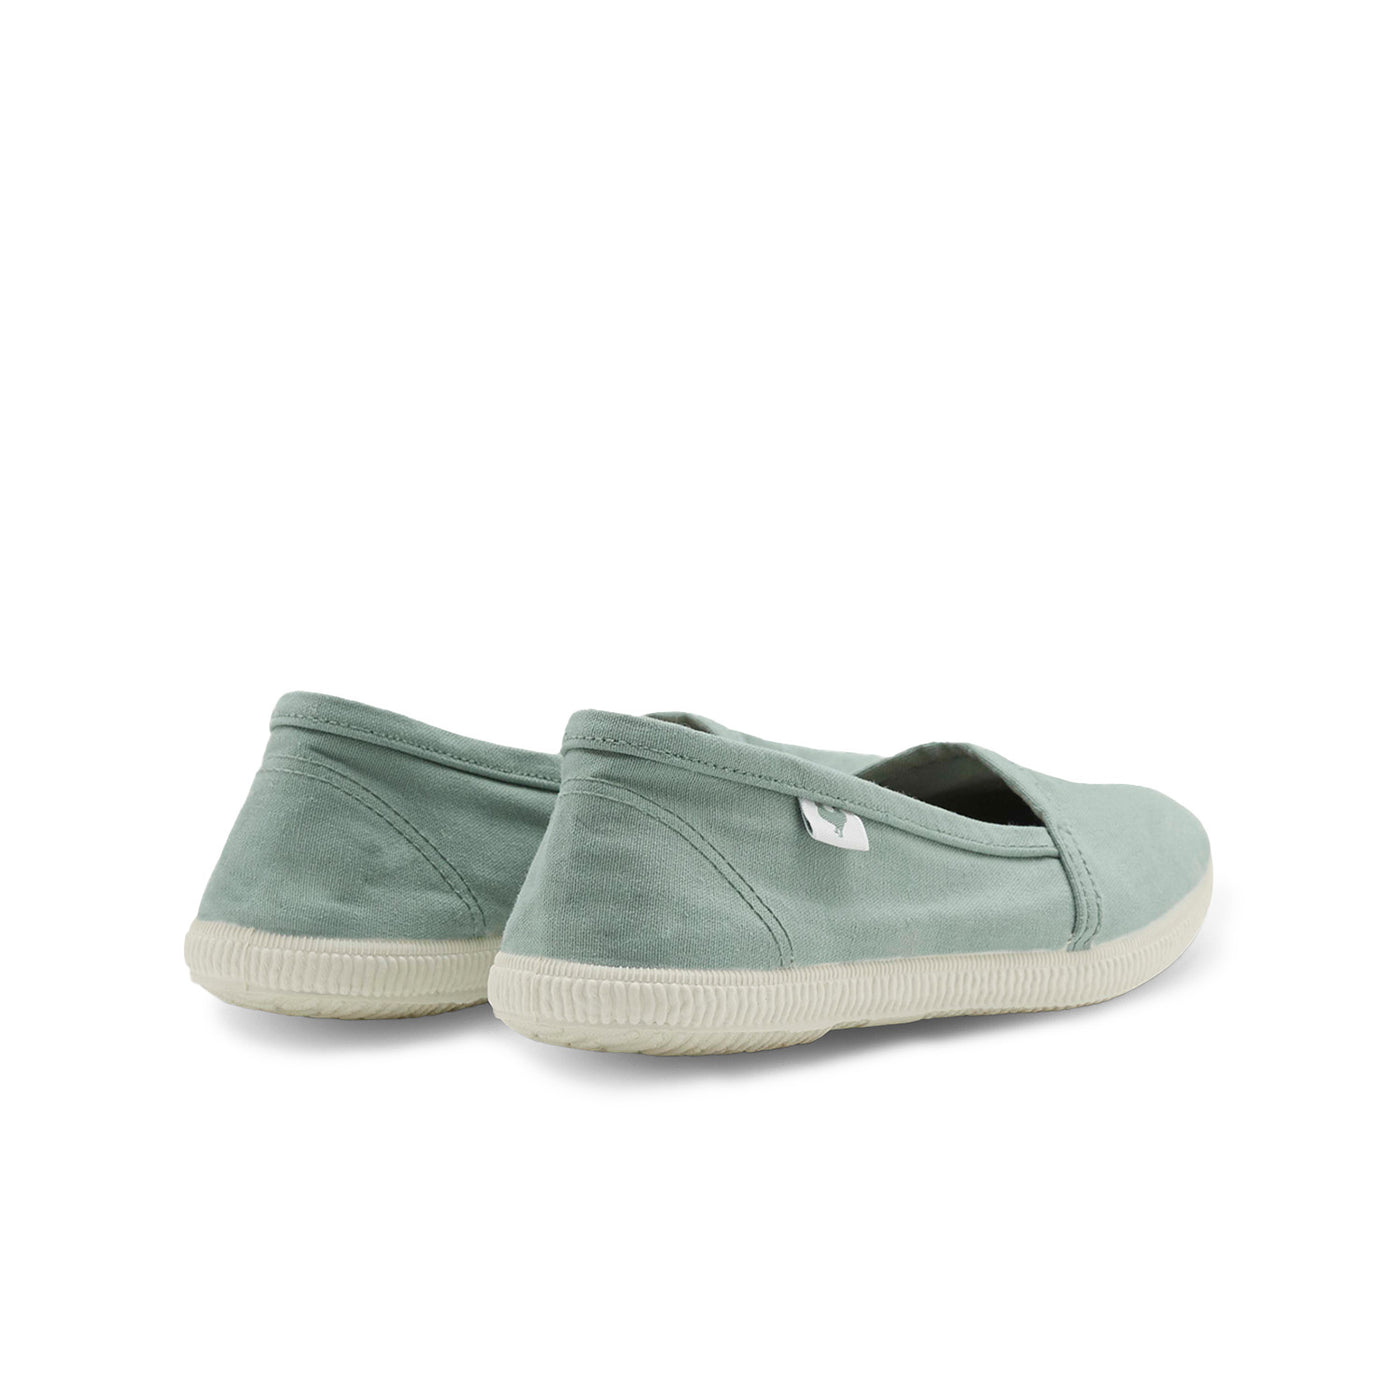 Original Pitas Beach Shoes in Med Green